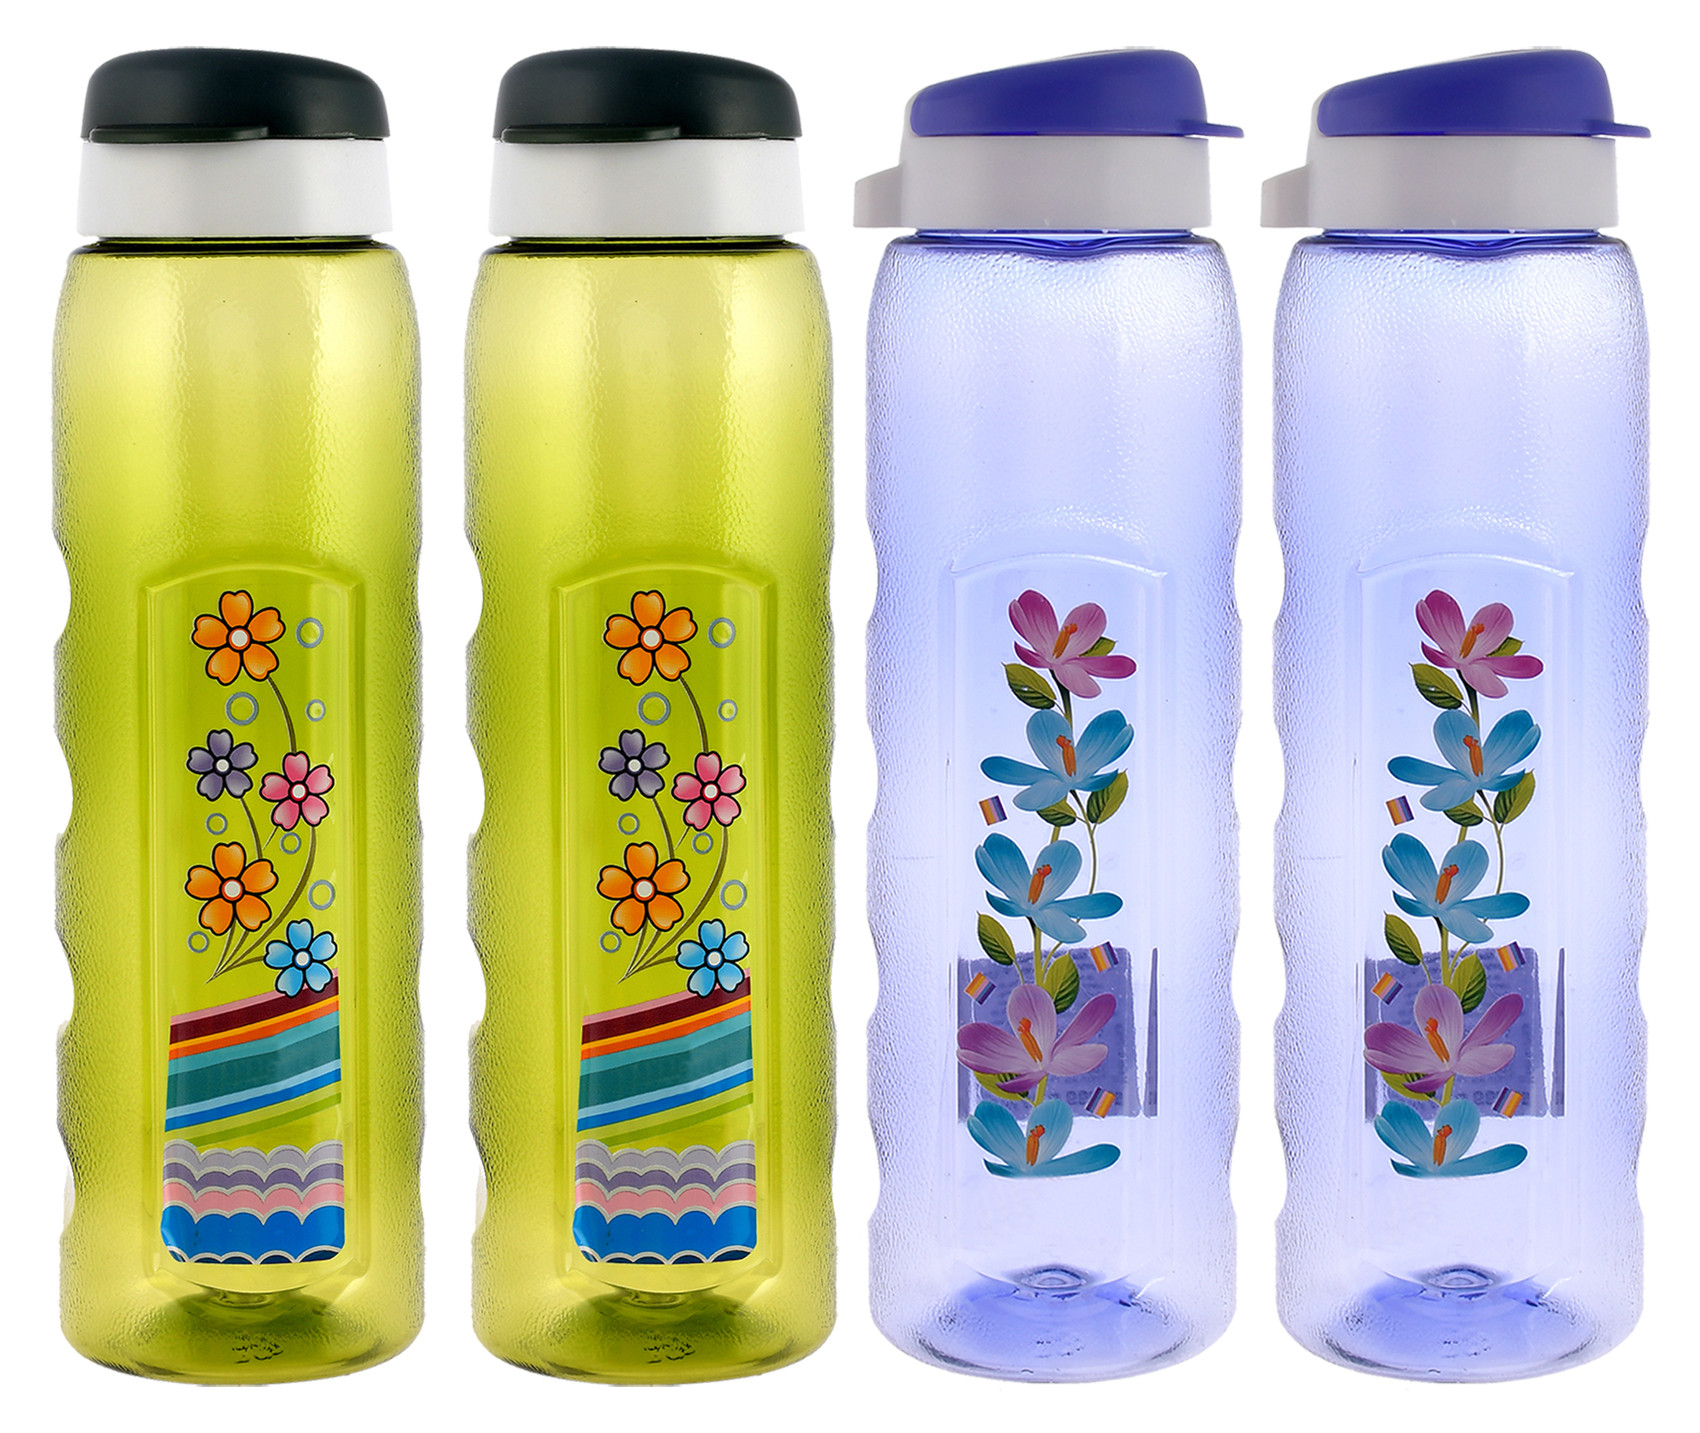 Kuber Industries Unbreakable BPA & Leak Free Plastic Water Bottle With Sipper-1 Litre, Pack of 4 (Pruple & Green)